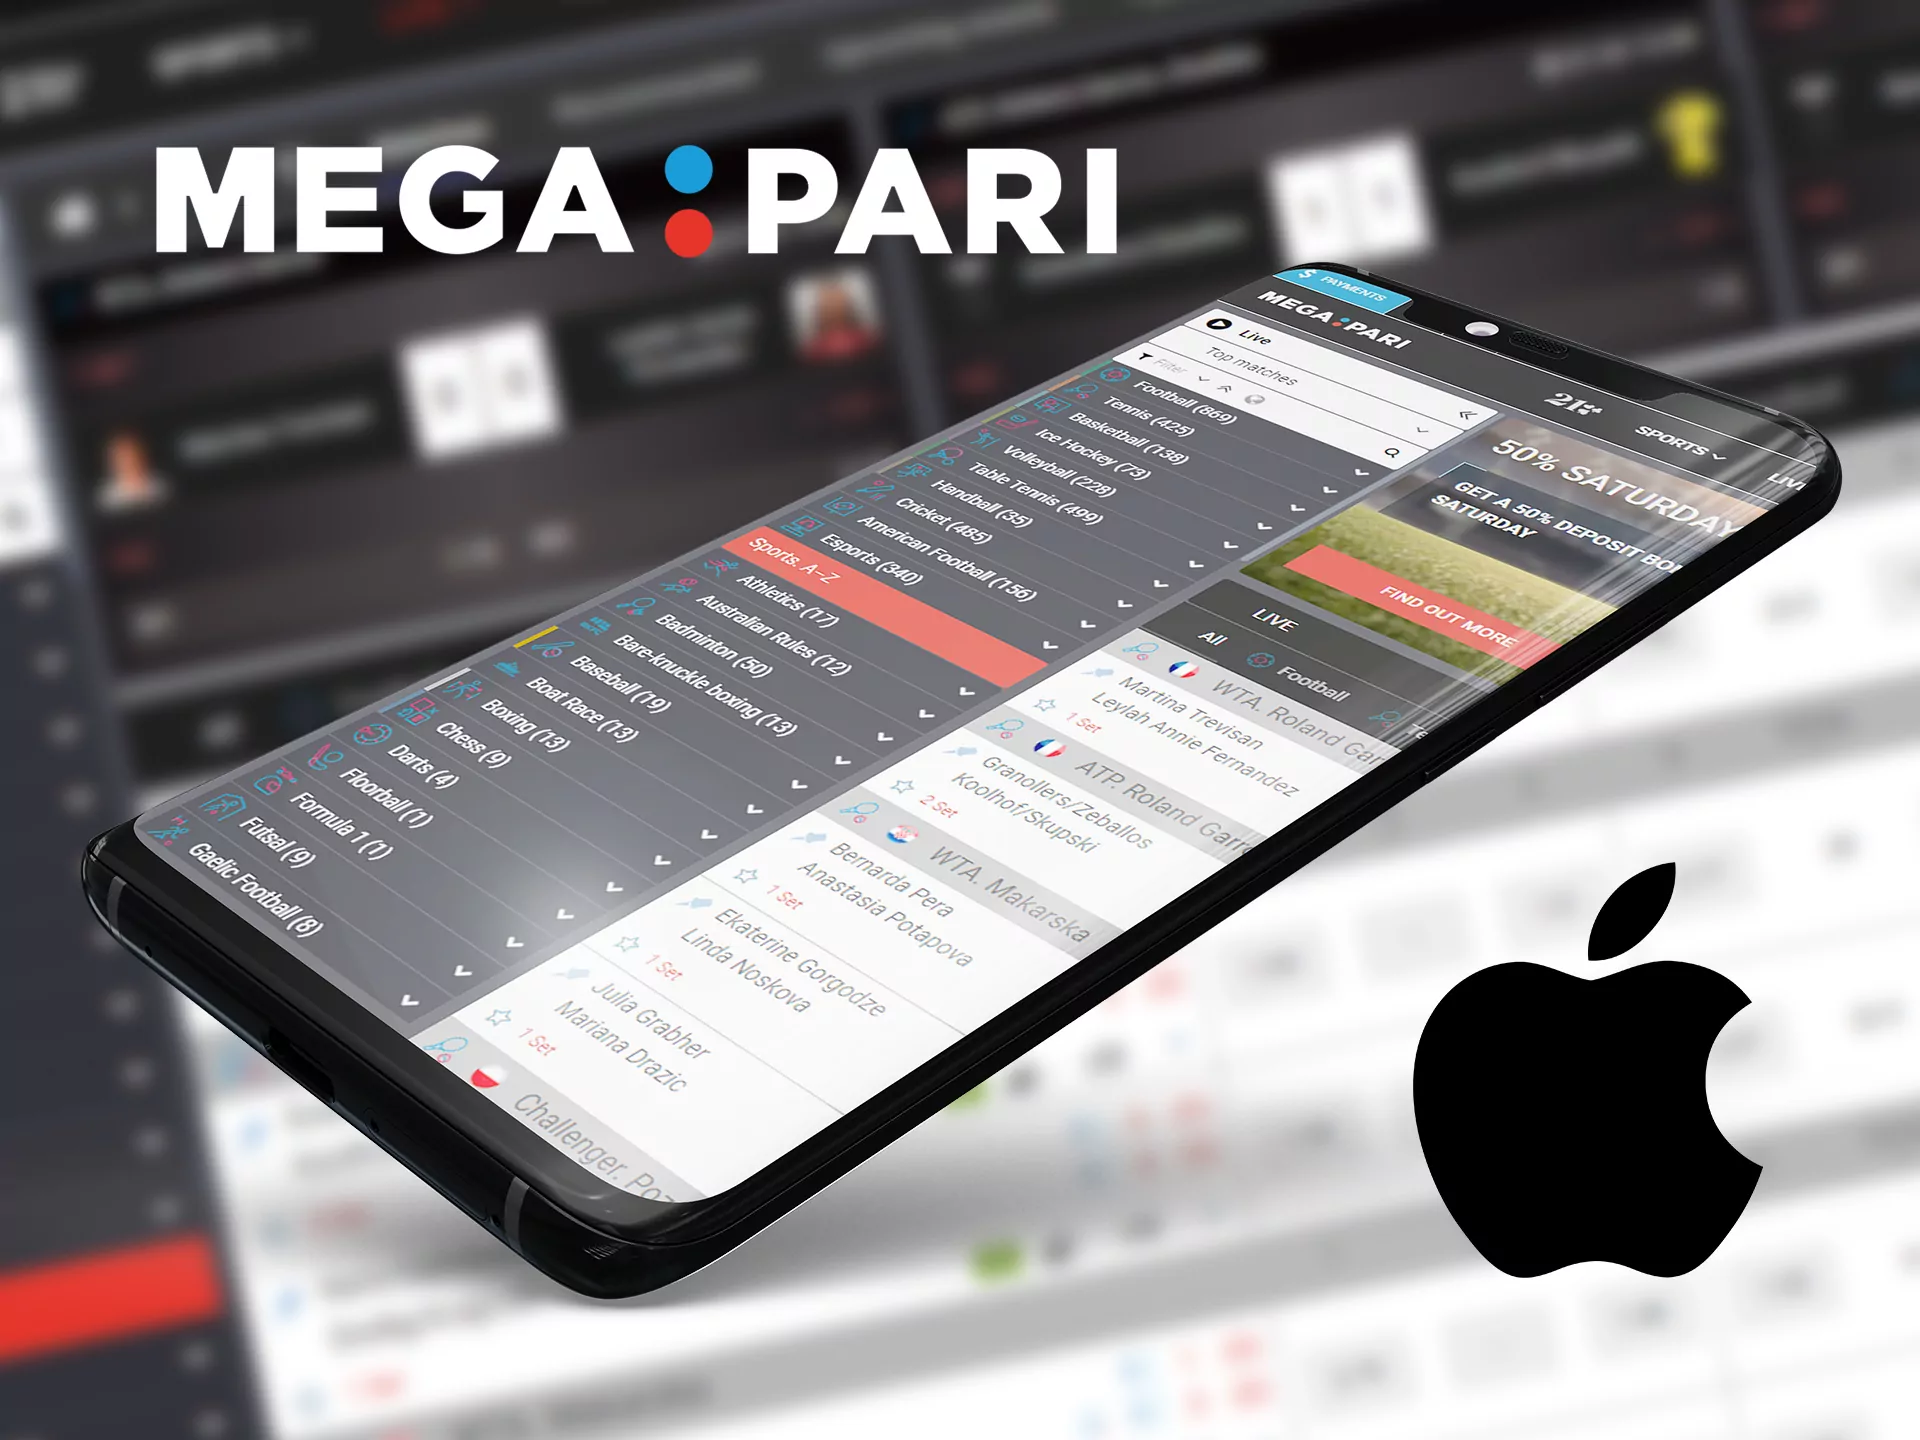 Download and install the Mega Pari app.